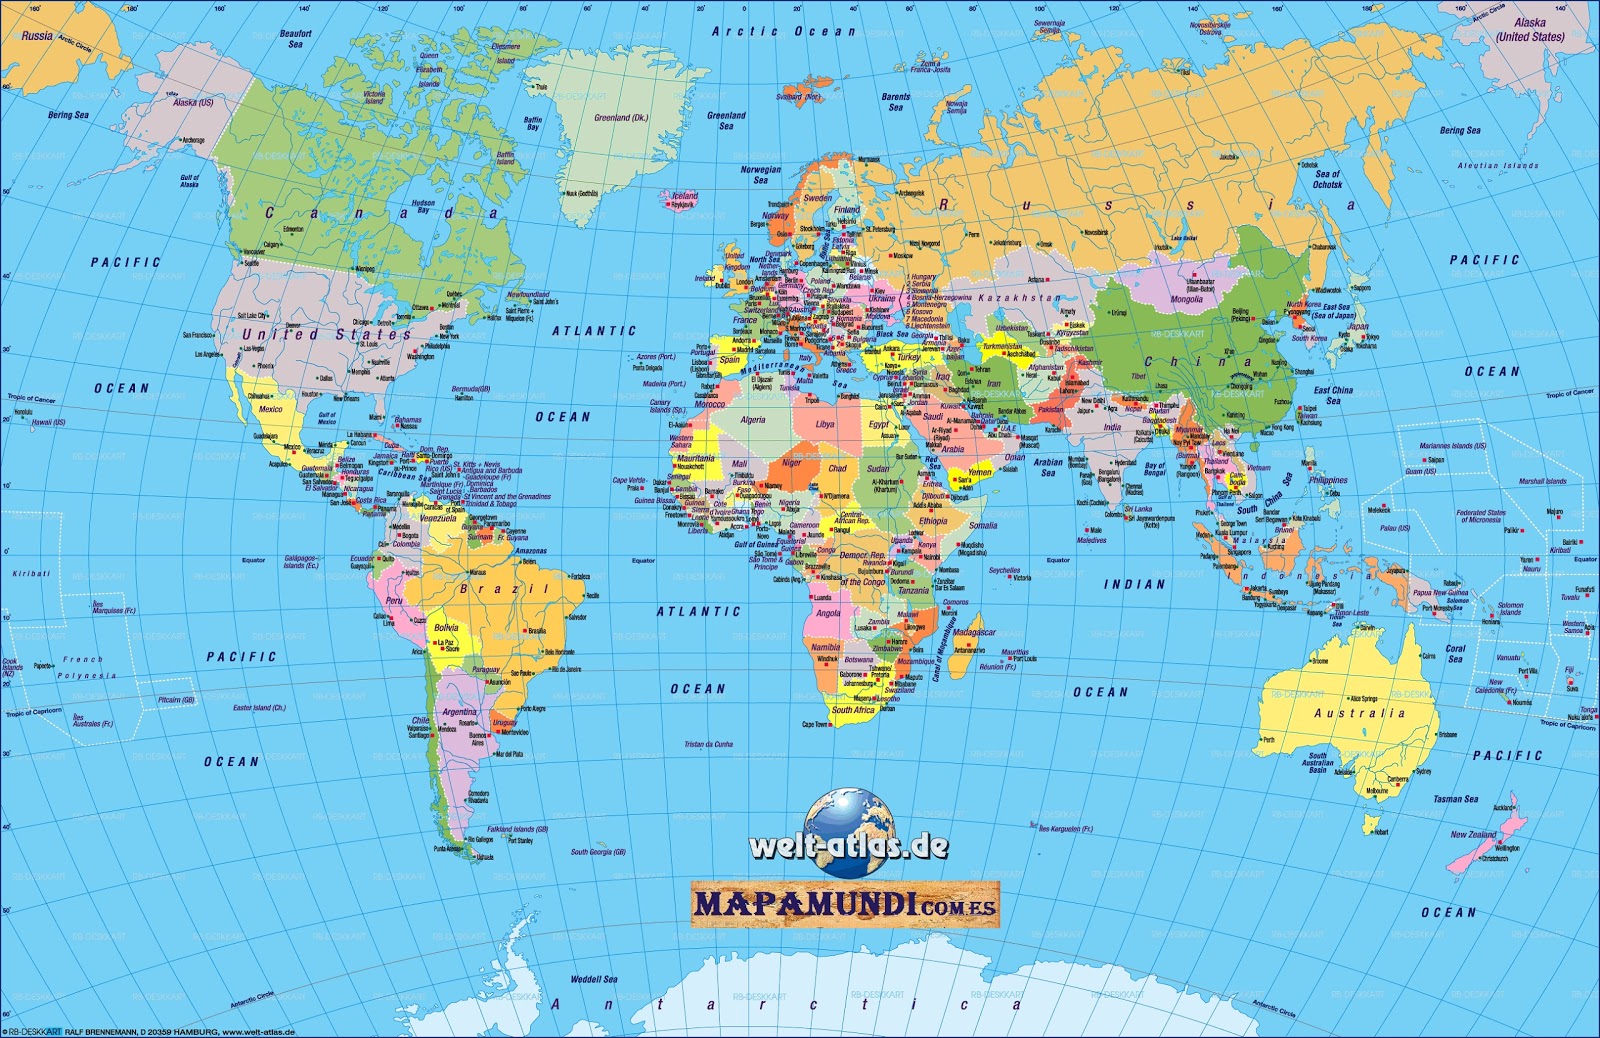 mapamundi | mapas del mundo y mucho más.: Mapamundi: Mapa del mundo